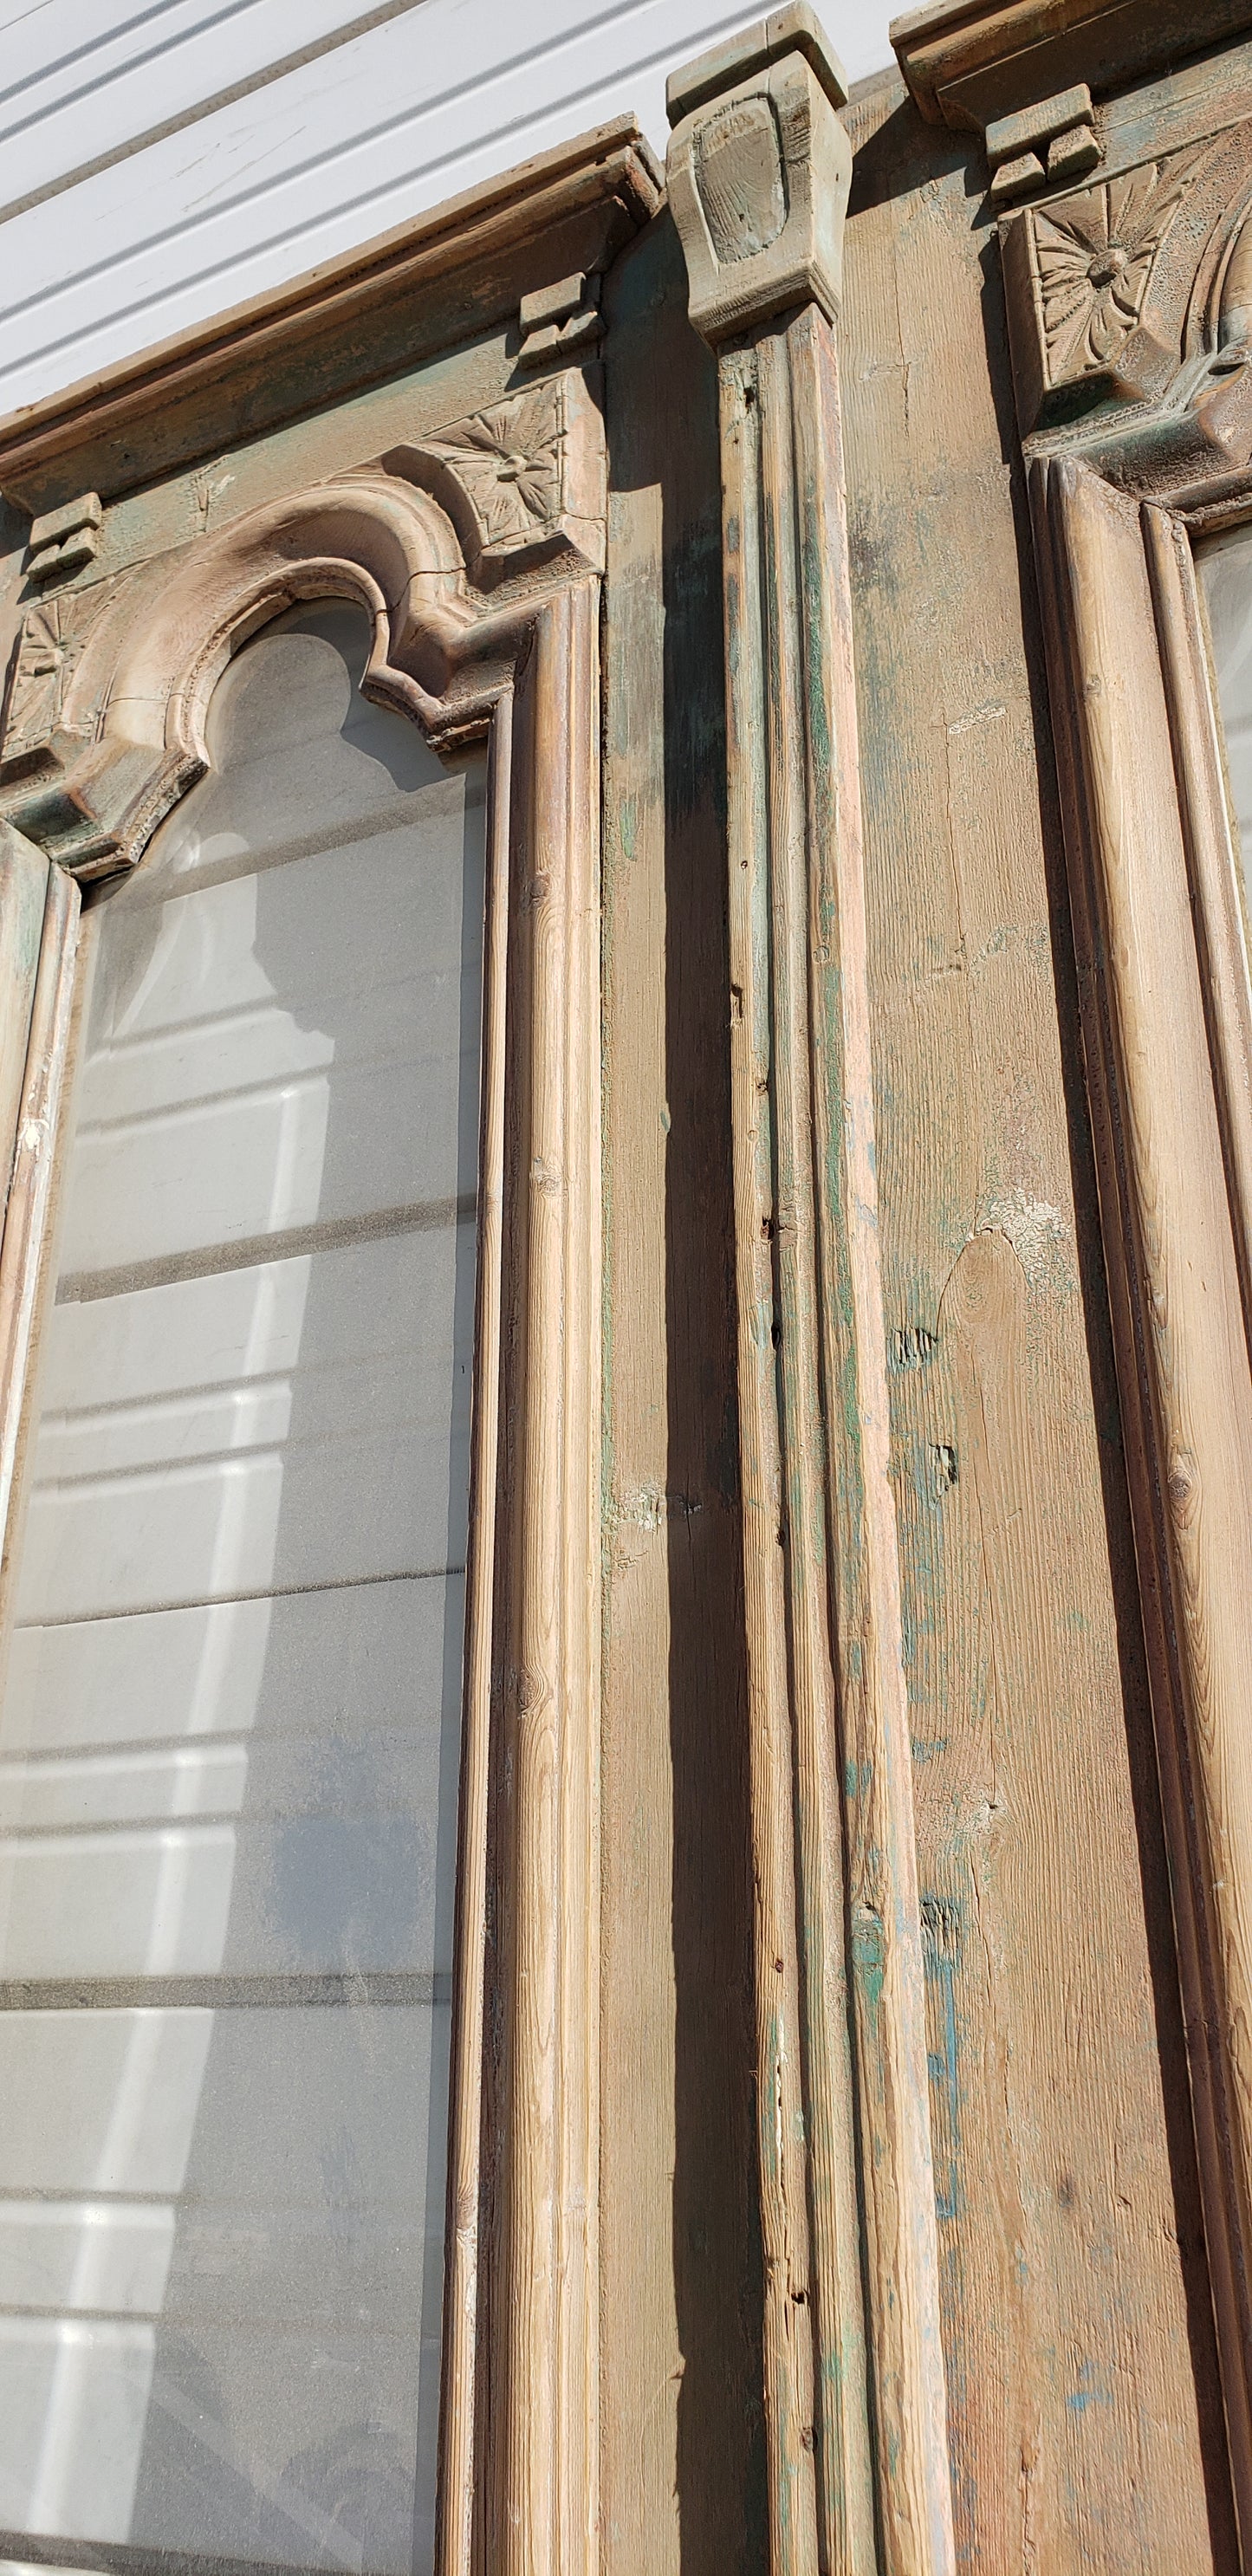 Pair of Antique Painted Single Lite Carved Doors